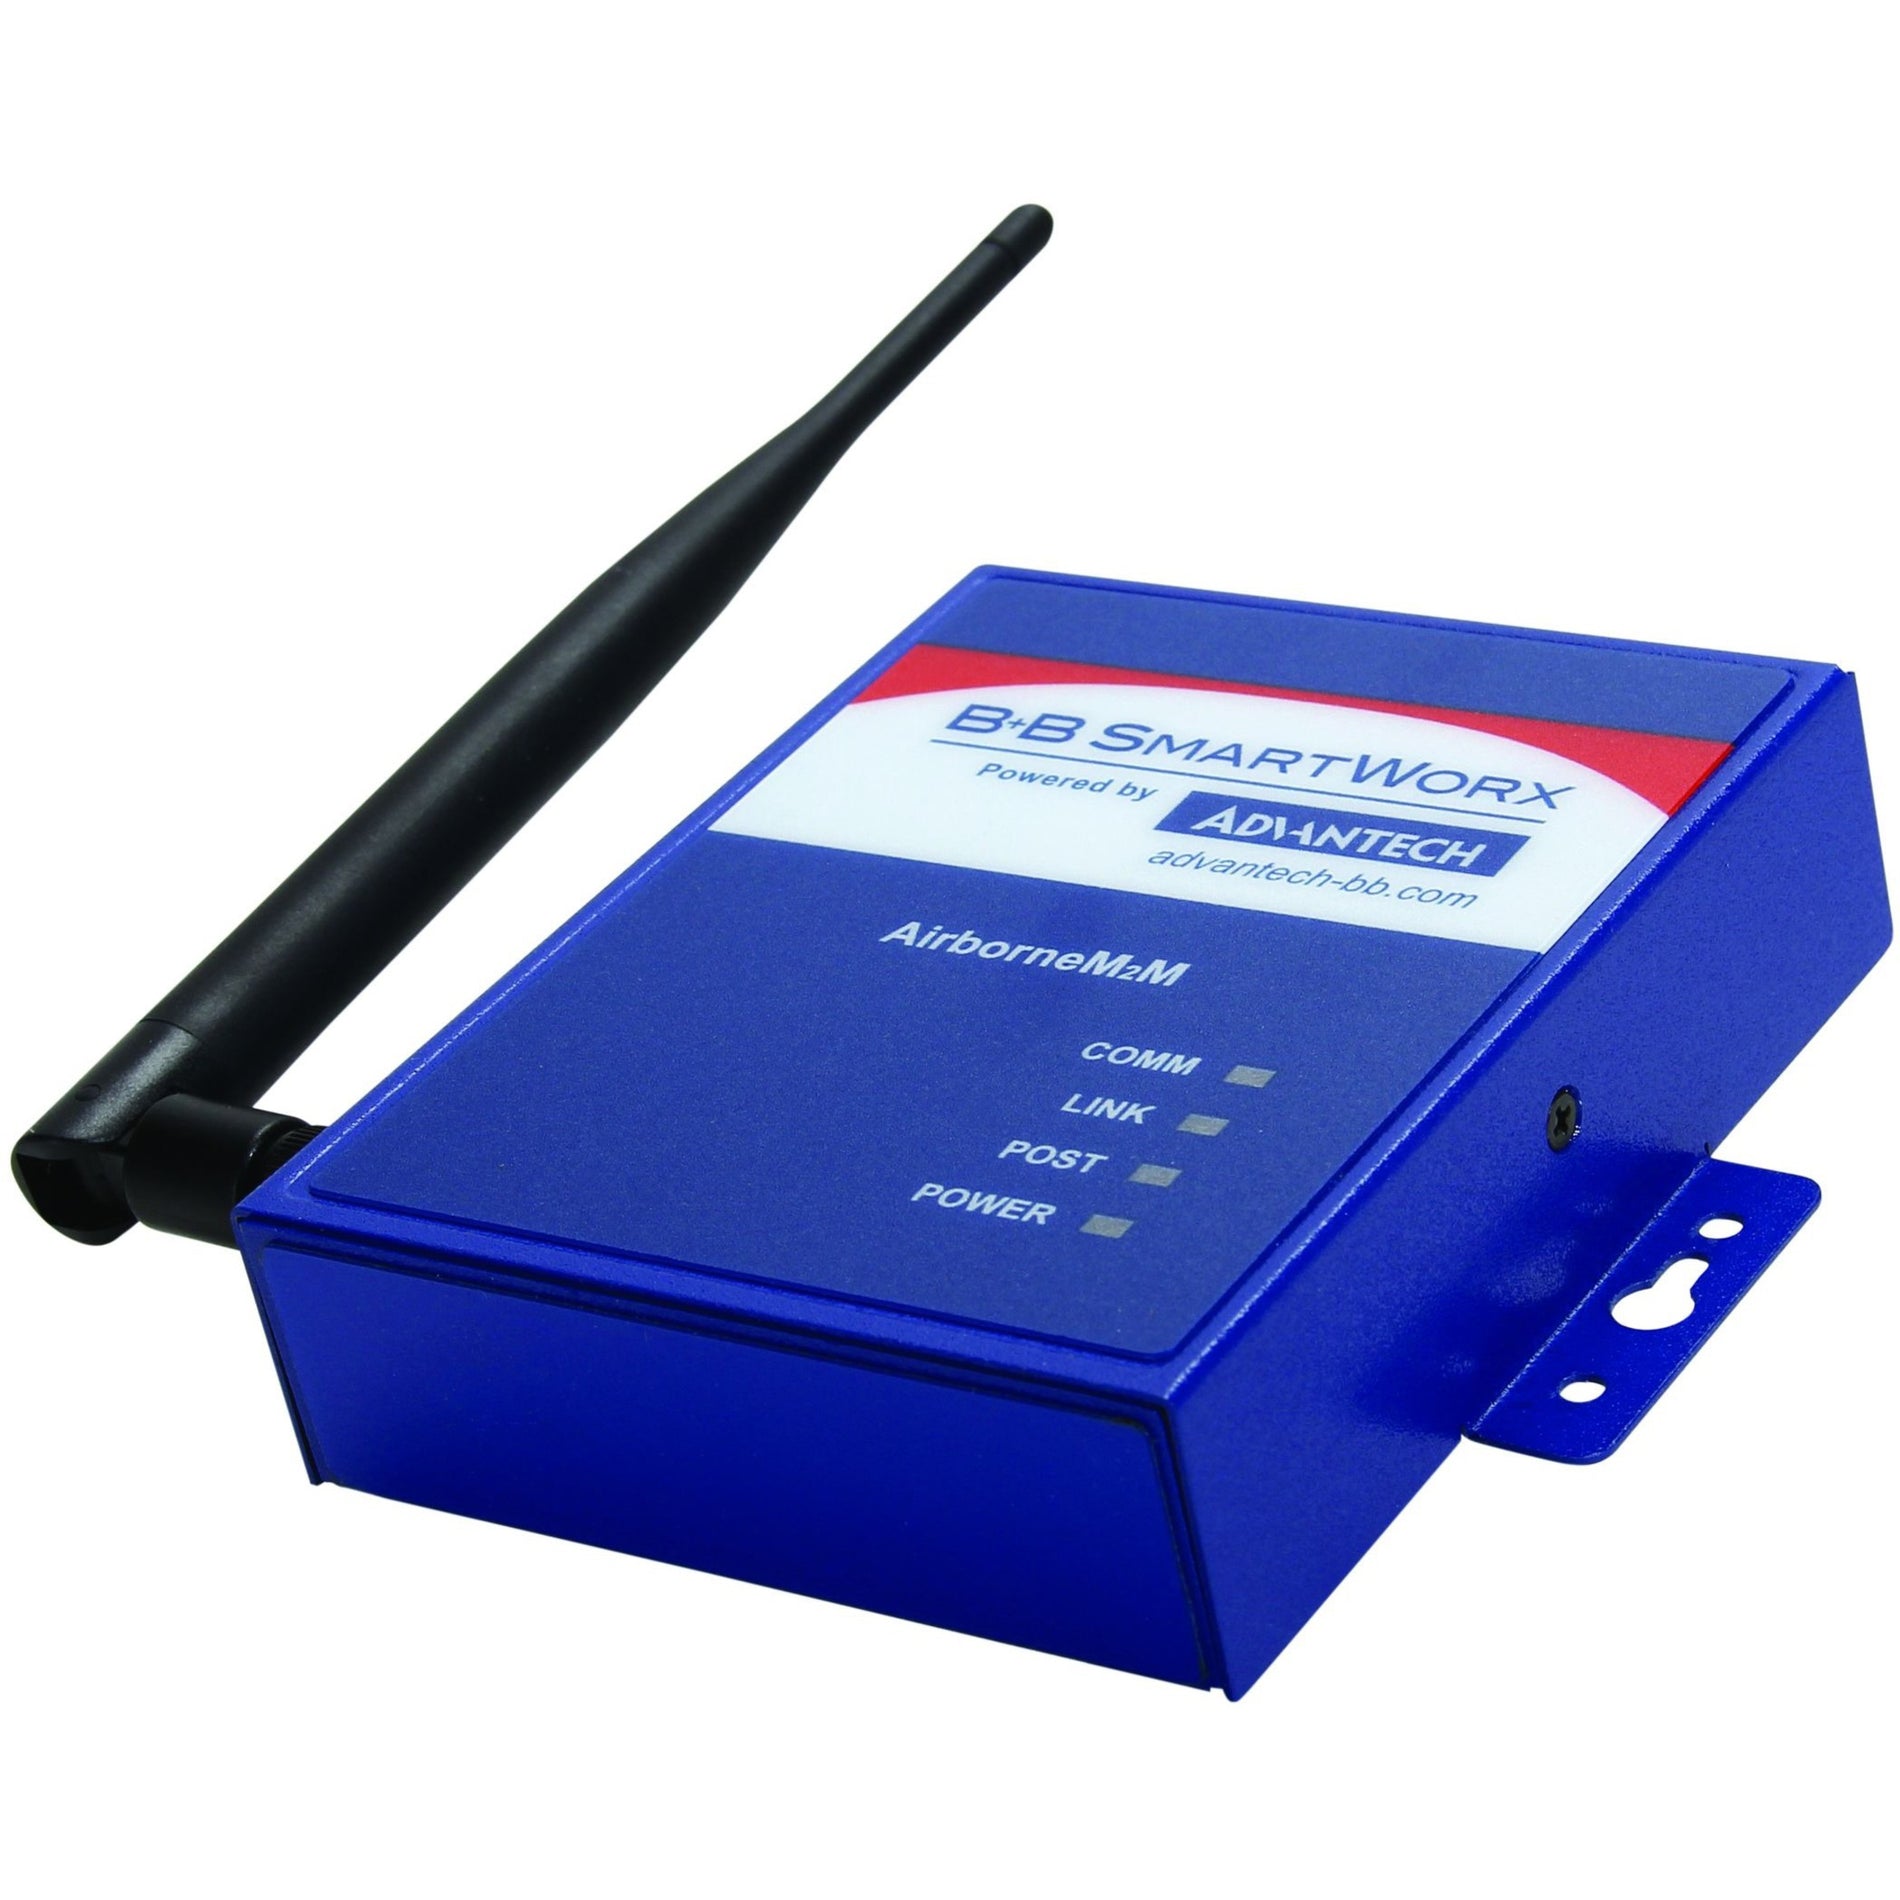 B+B SmartWorx ABDN-ER-IN5010 Wi-Fi Dual Band Industrial Ethernet Bridge/Router, Lifetime Warranty, United States Origin